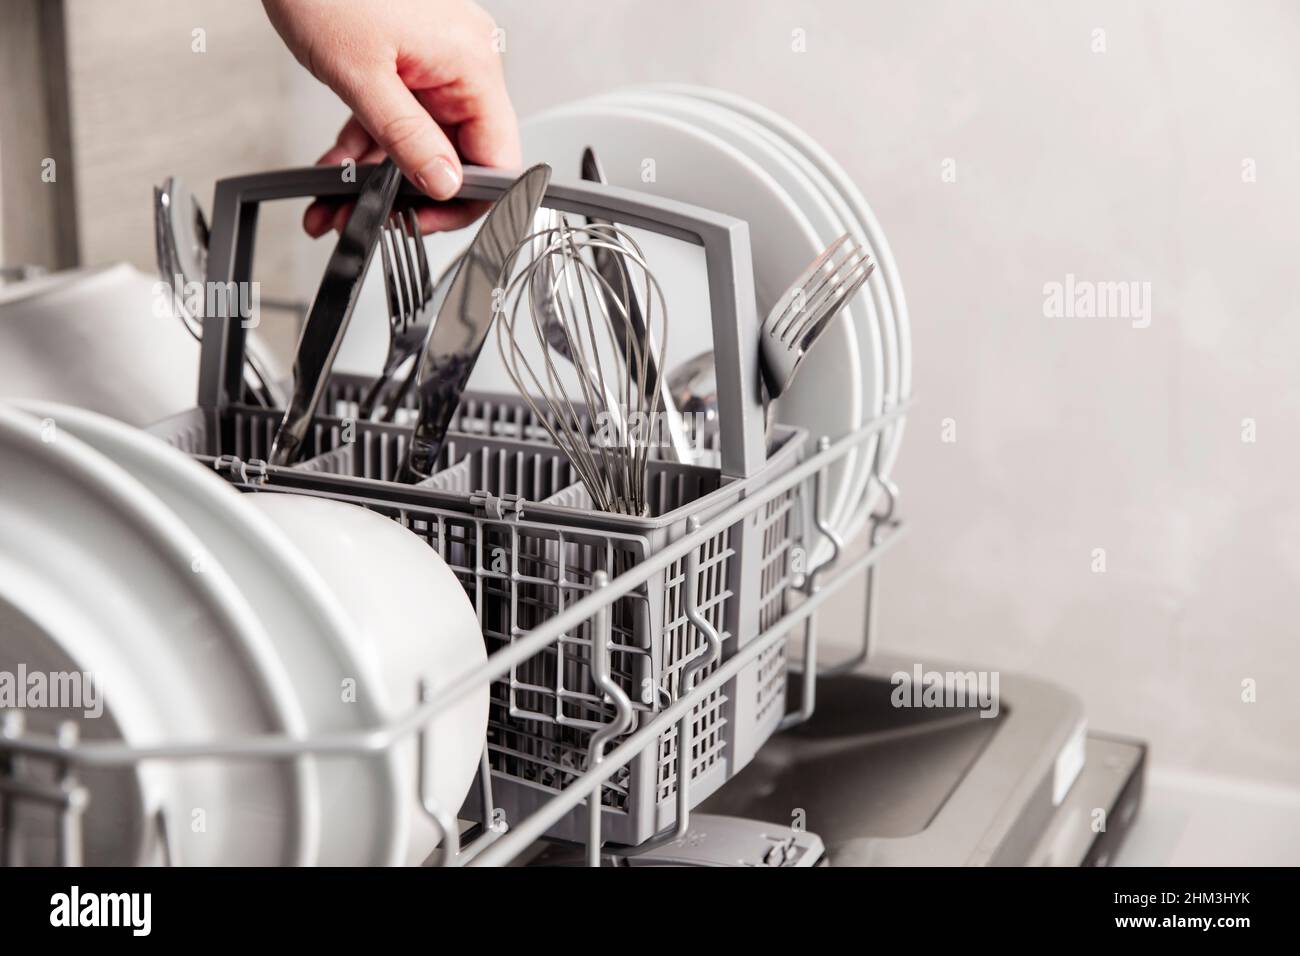 Dish washing tools stock image. Image of dish, home, isolated - 1808103